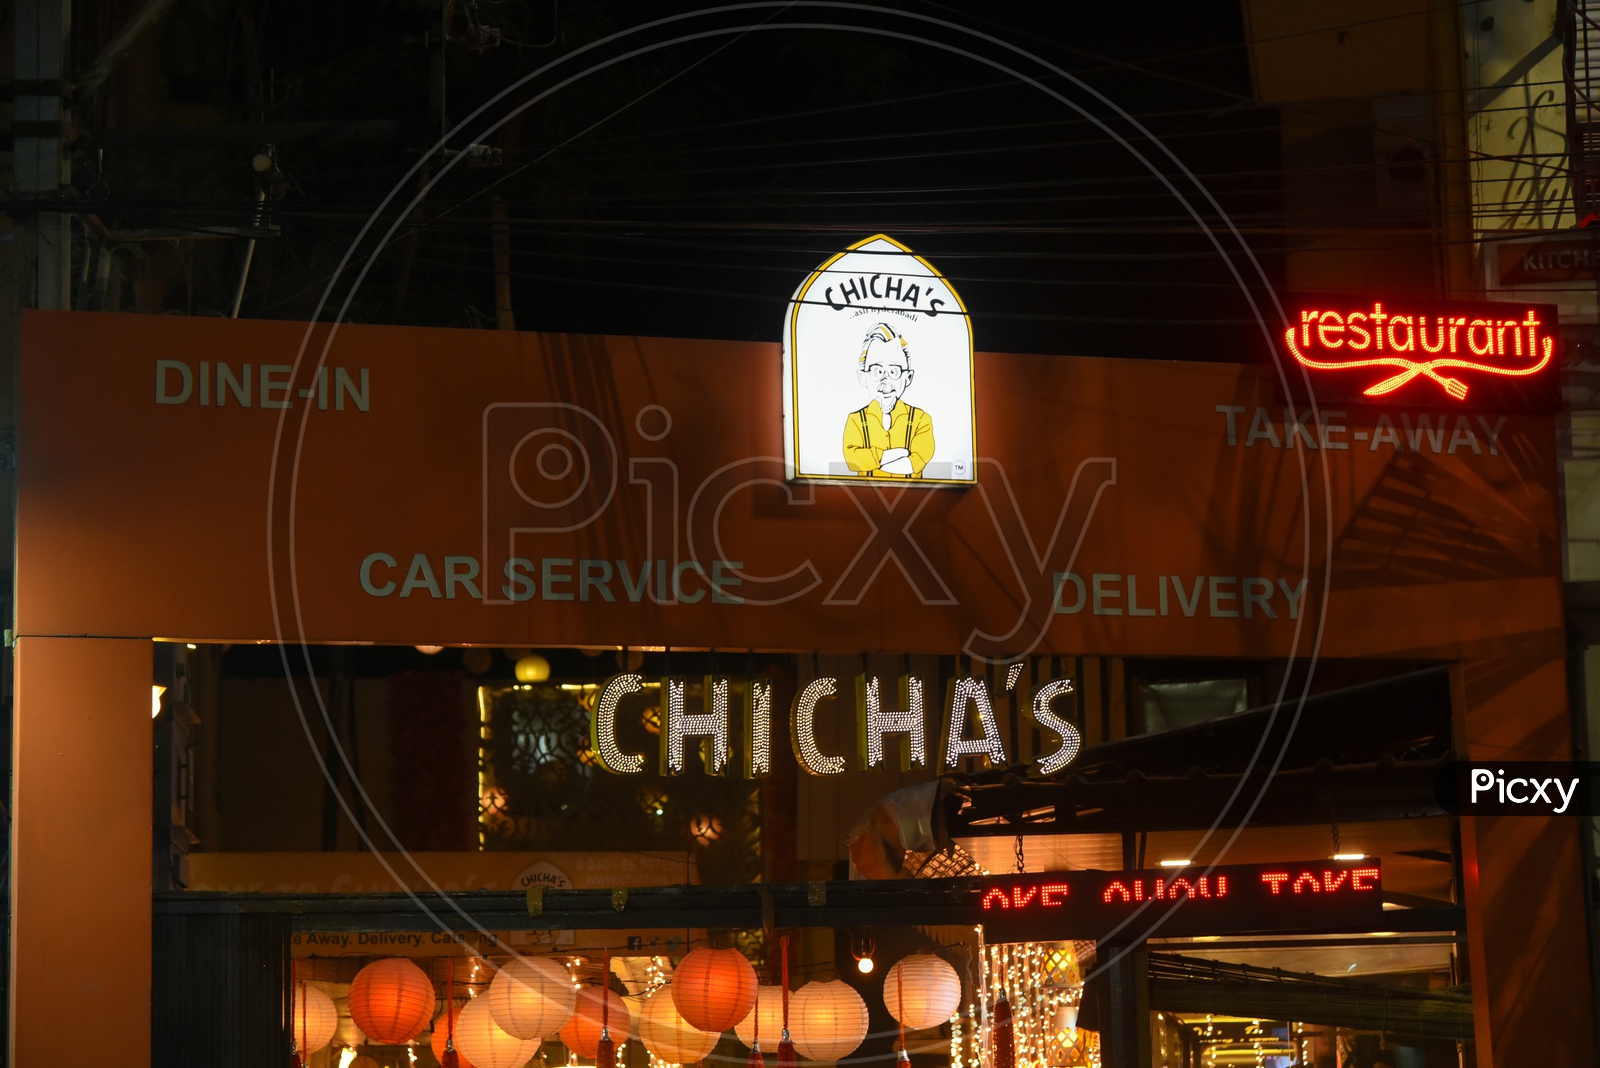 Chicha's Restaurant